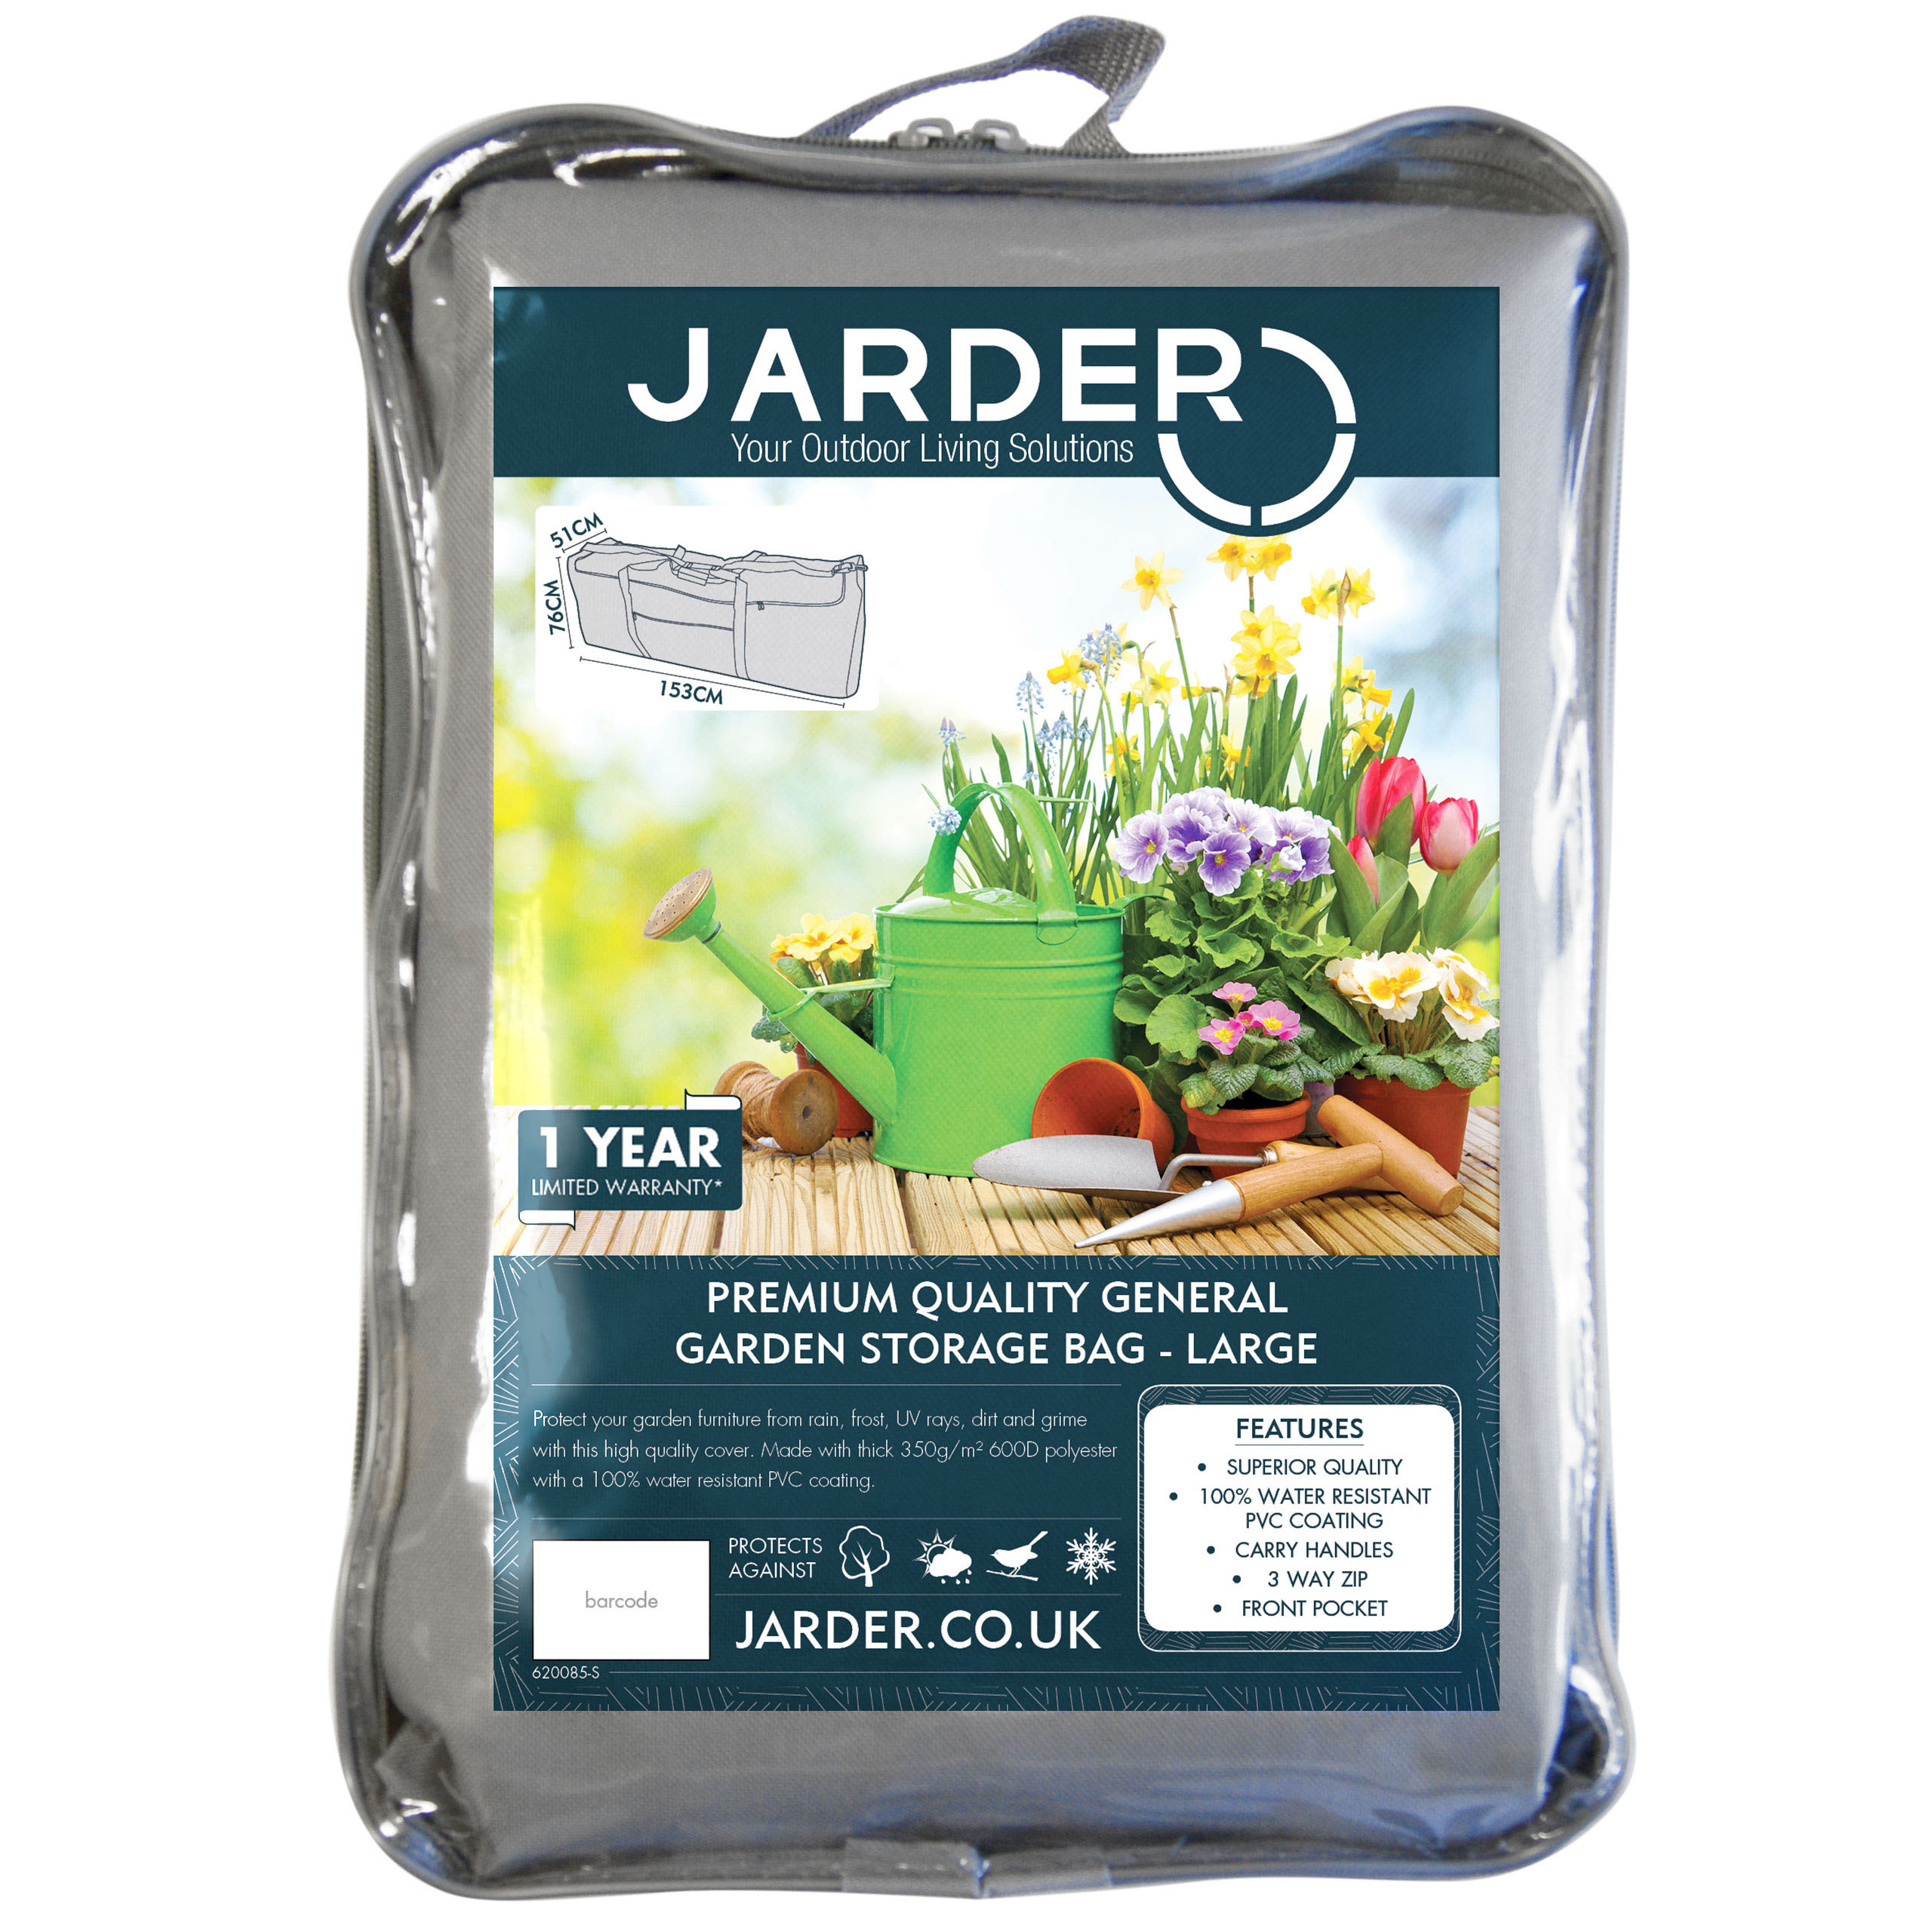 Garden Storage Bag - Large